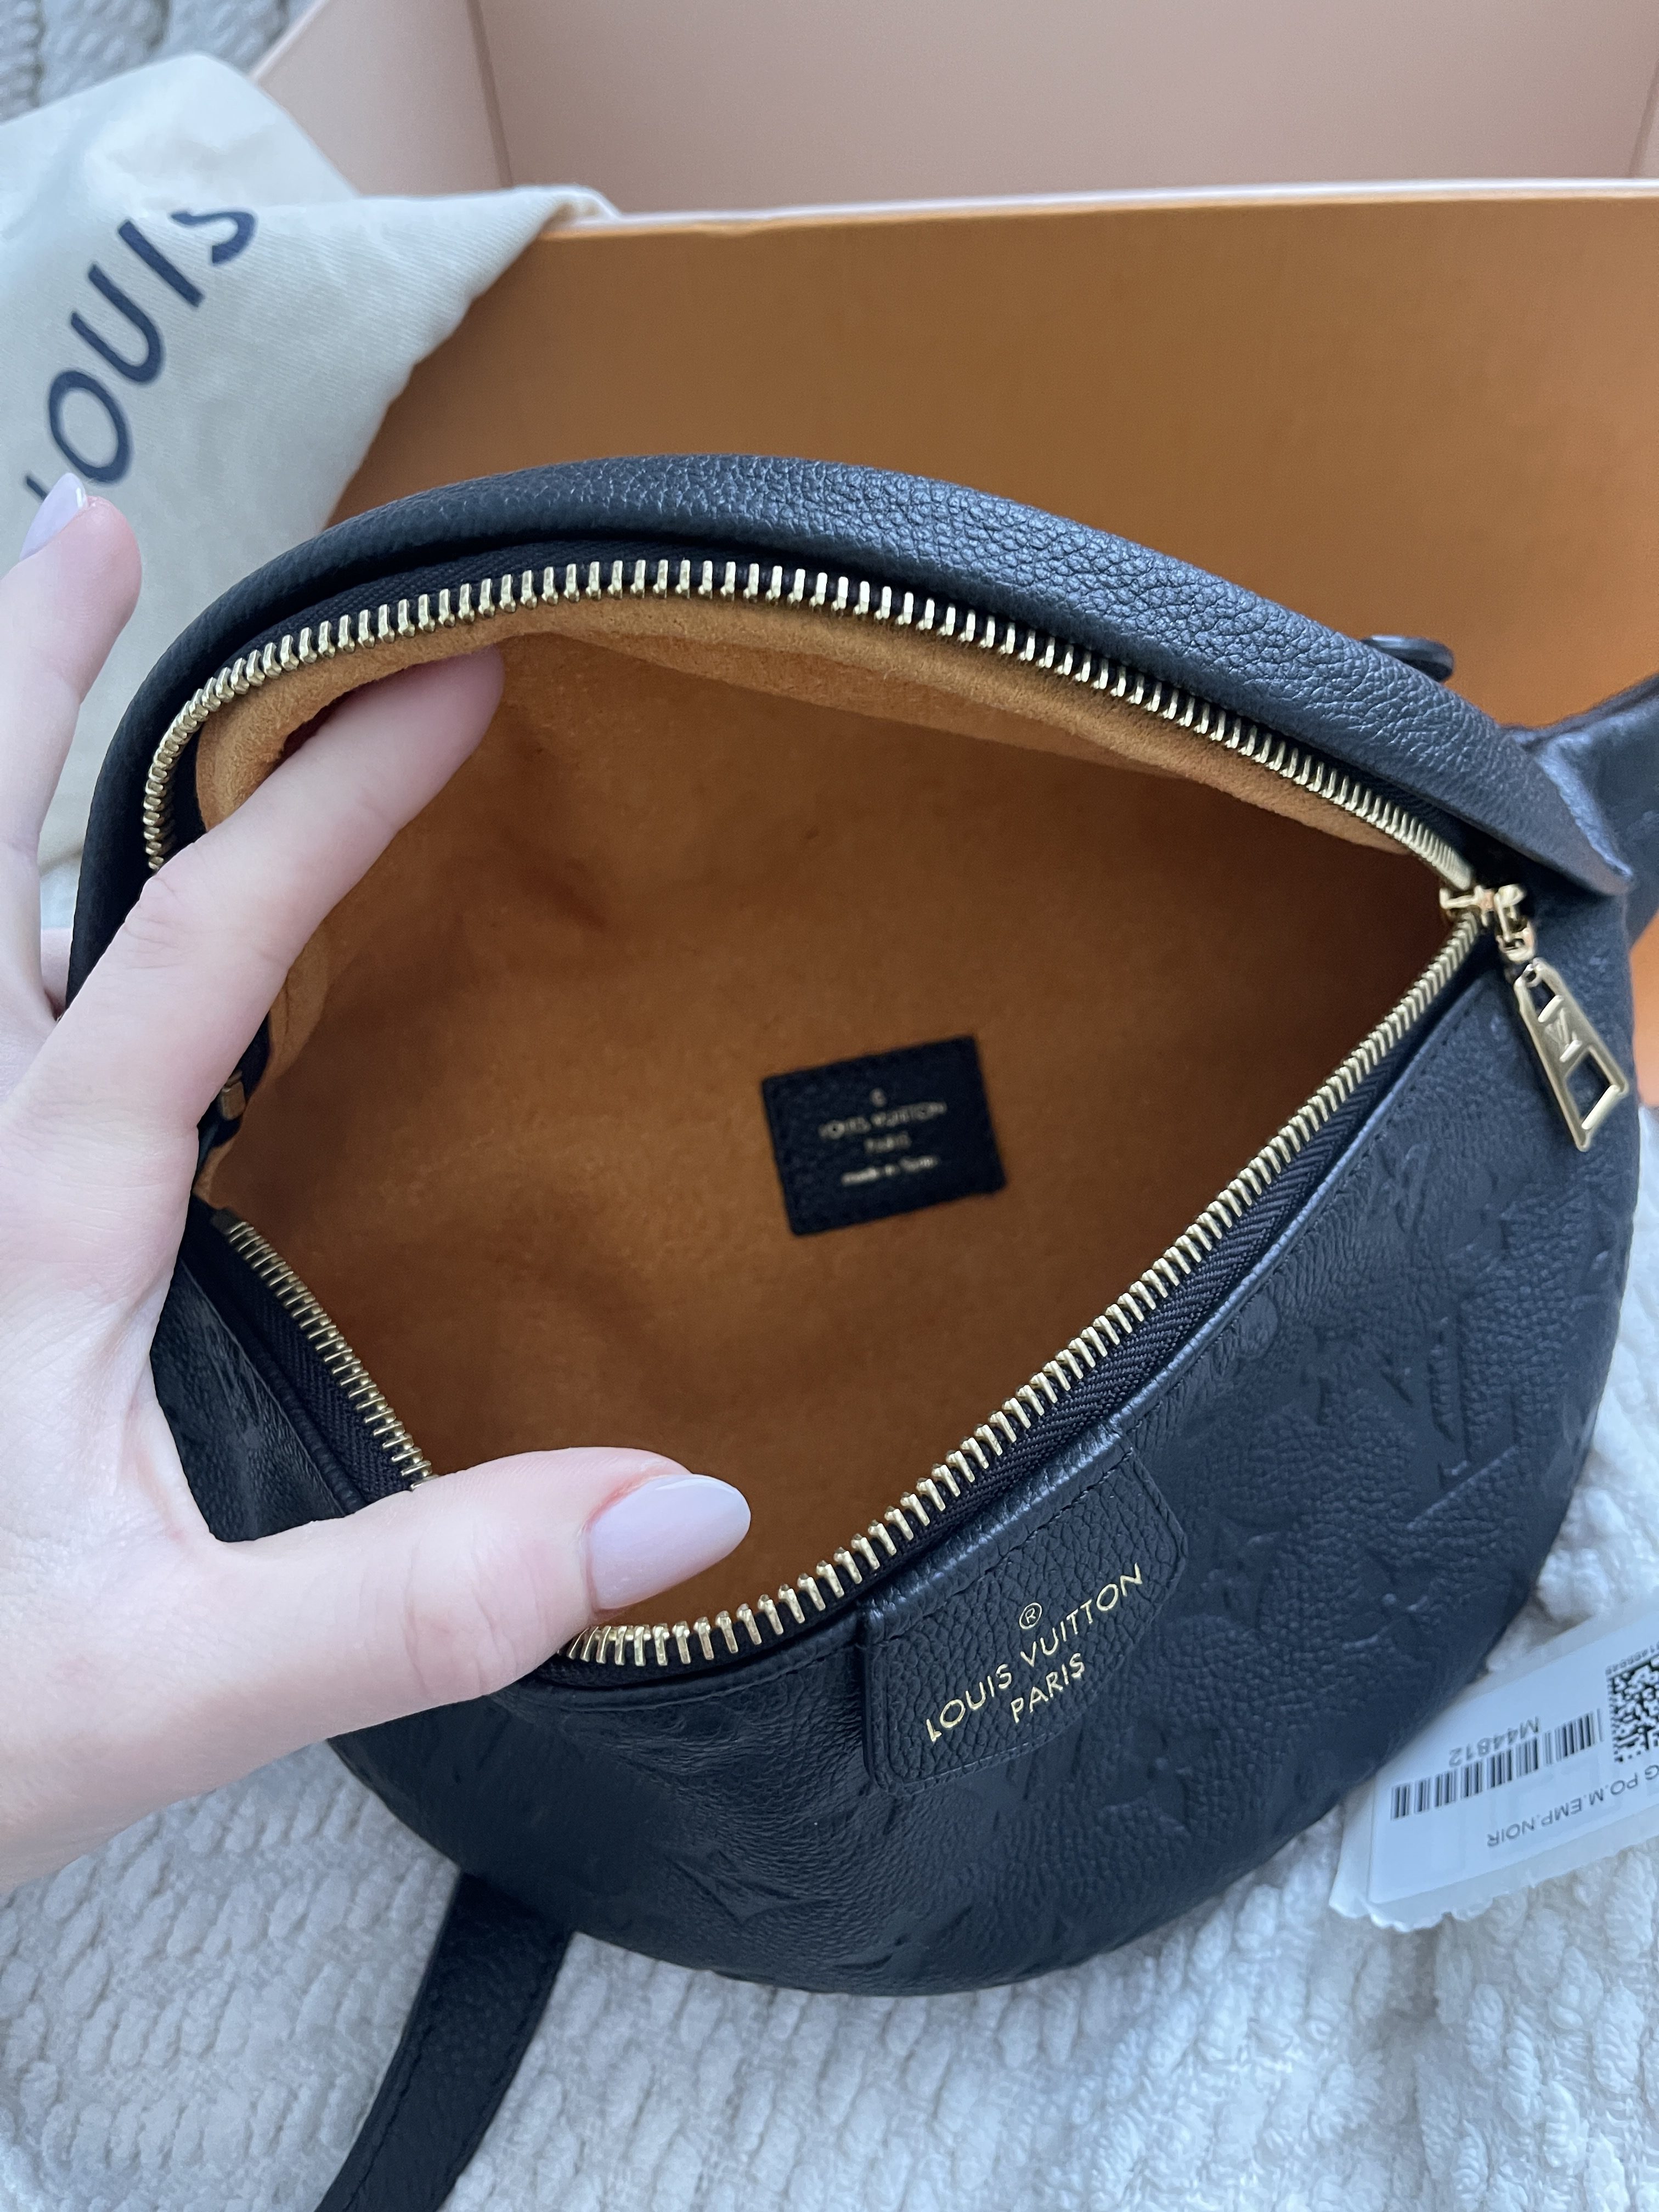 Louis Vuitton M44812 LV Bumbag in Black Monogram Empreinte leather Replica  sale online ,buy fake bag